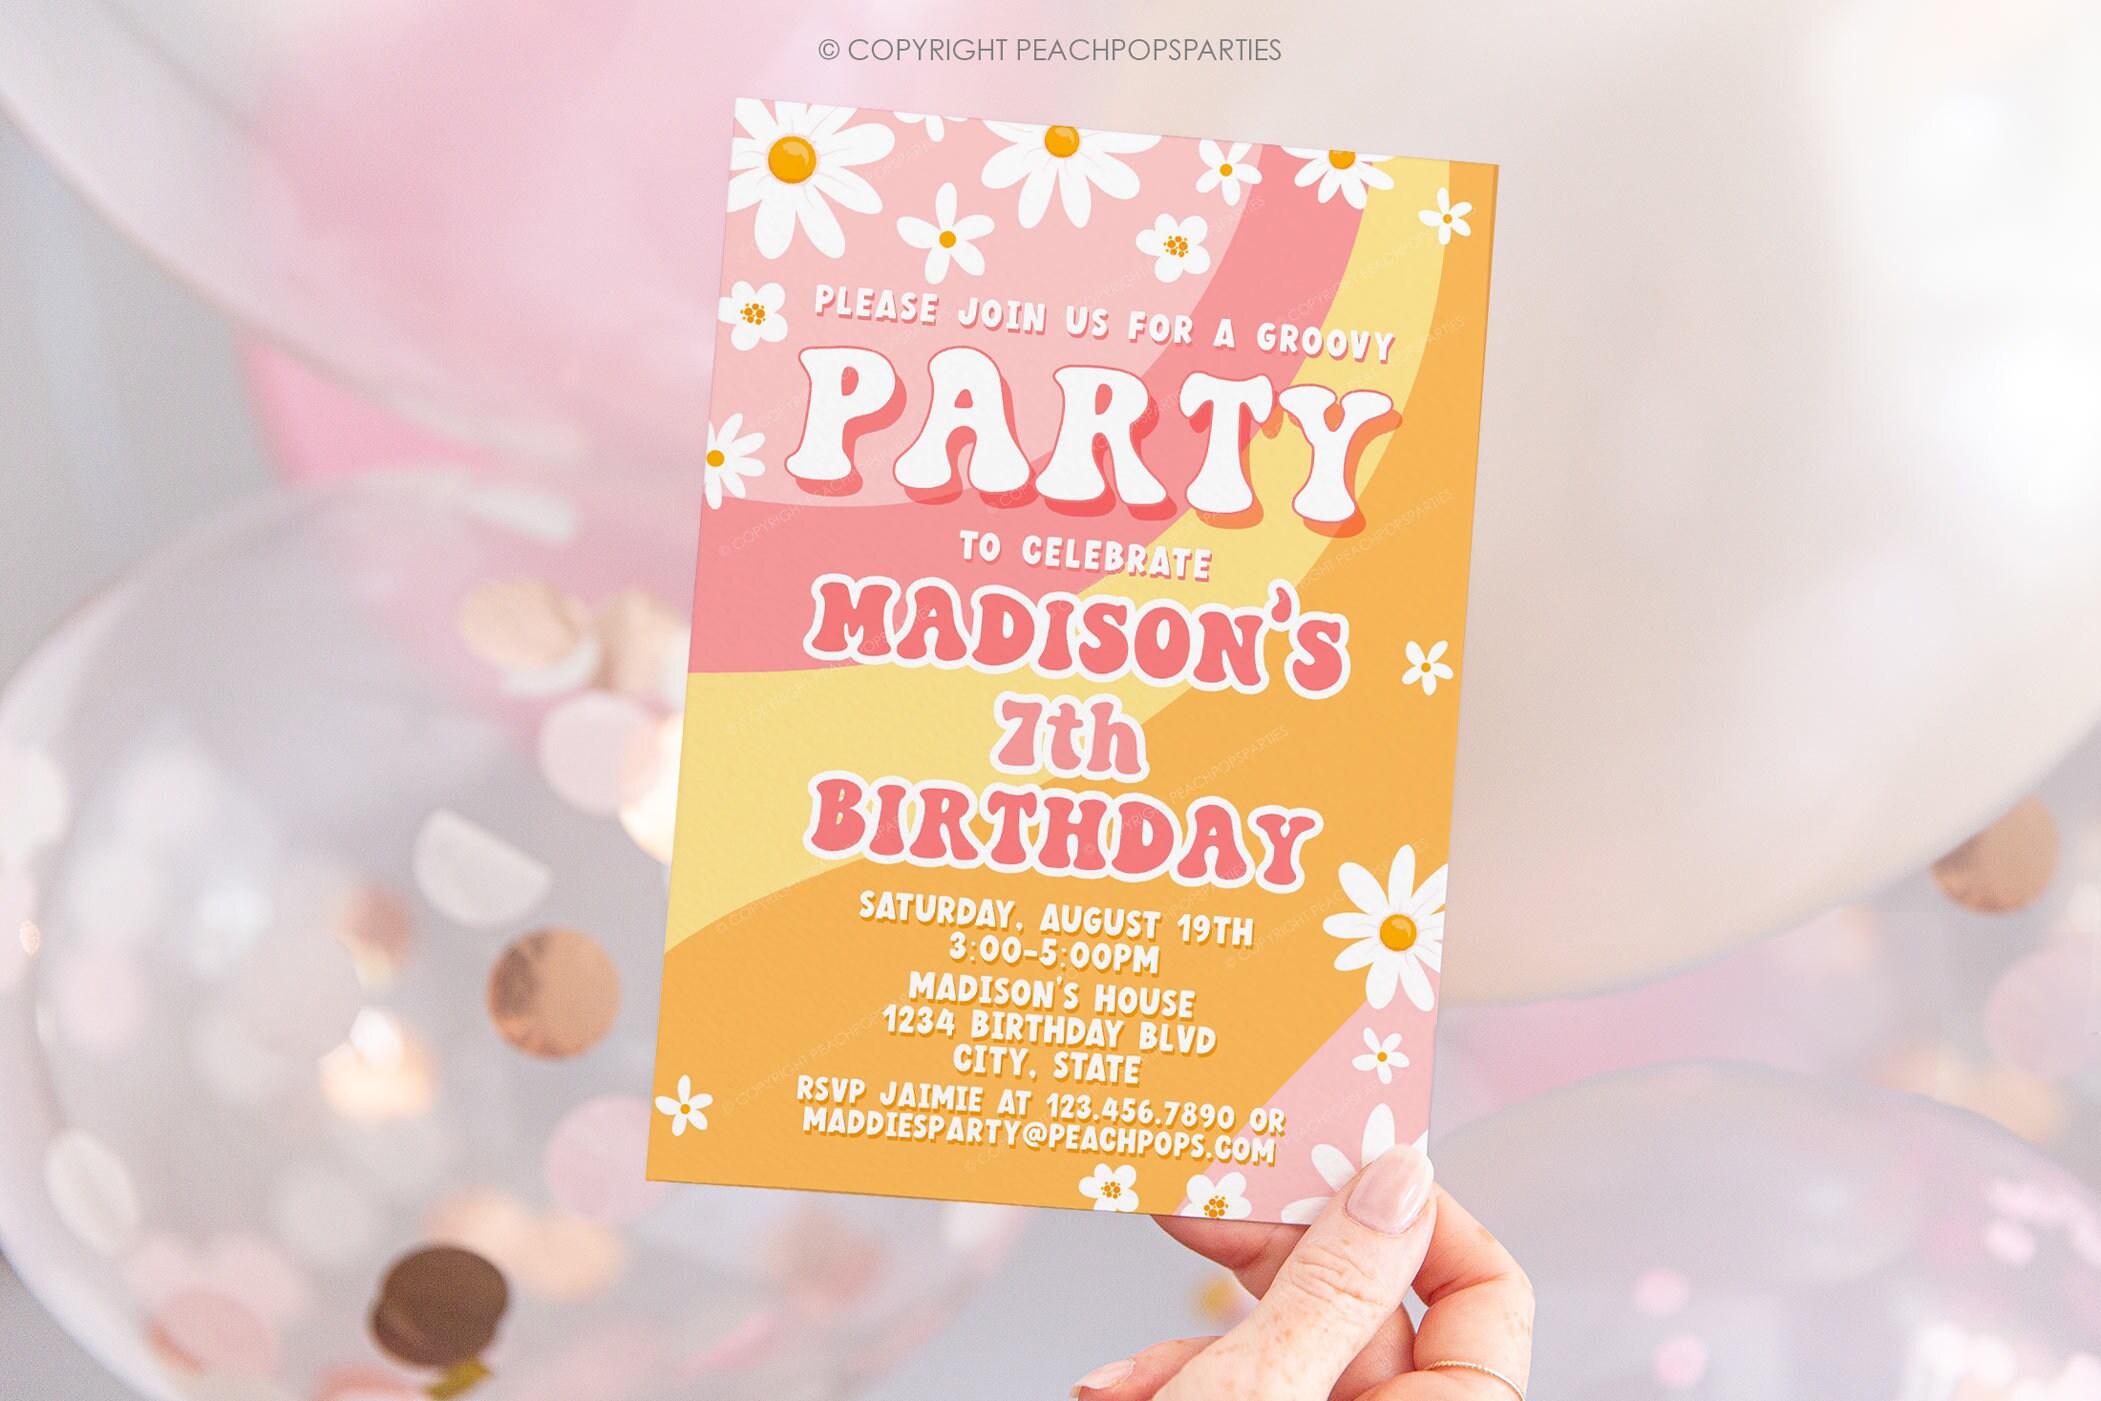 Koyal Wholesale Retro Daisy Birthday Party Invitations with Envelopes, Birthday Party Supplies, 5x7-inch, 24-pk, White